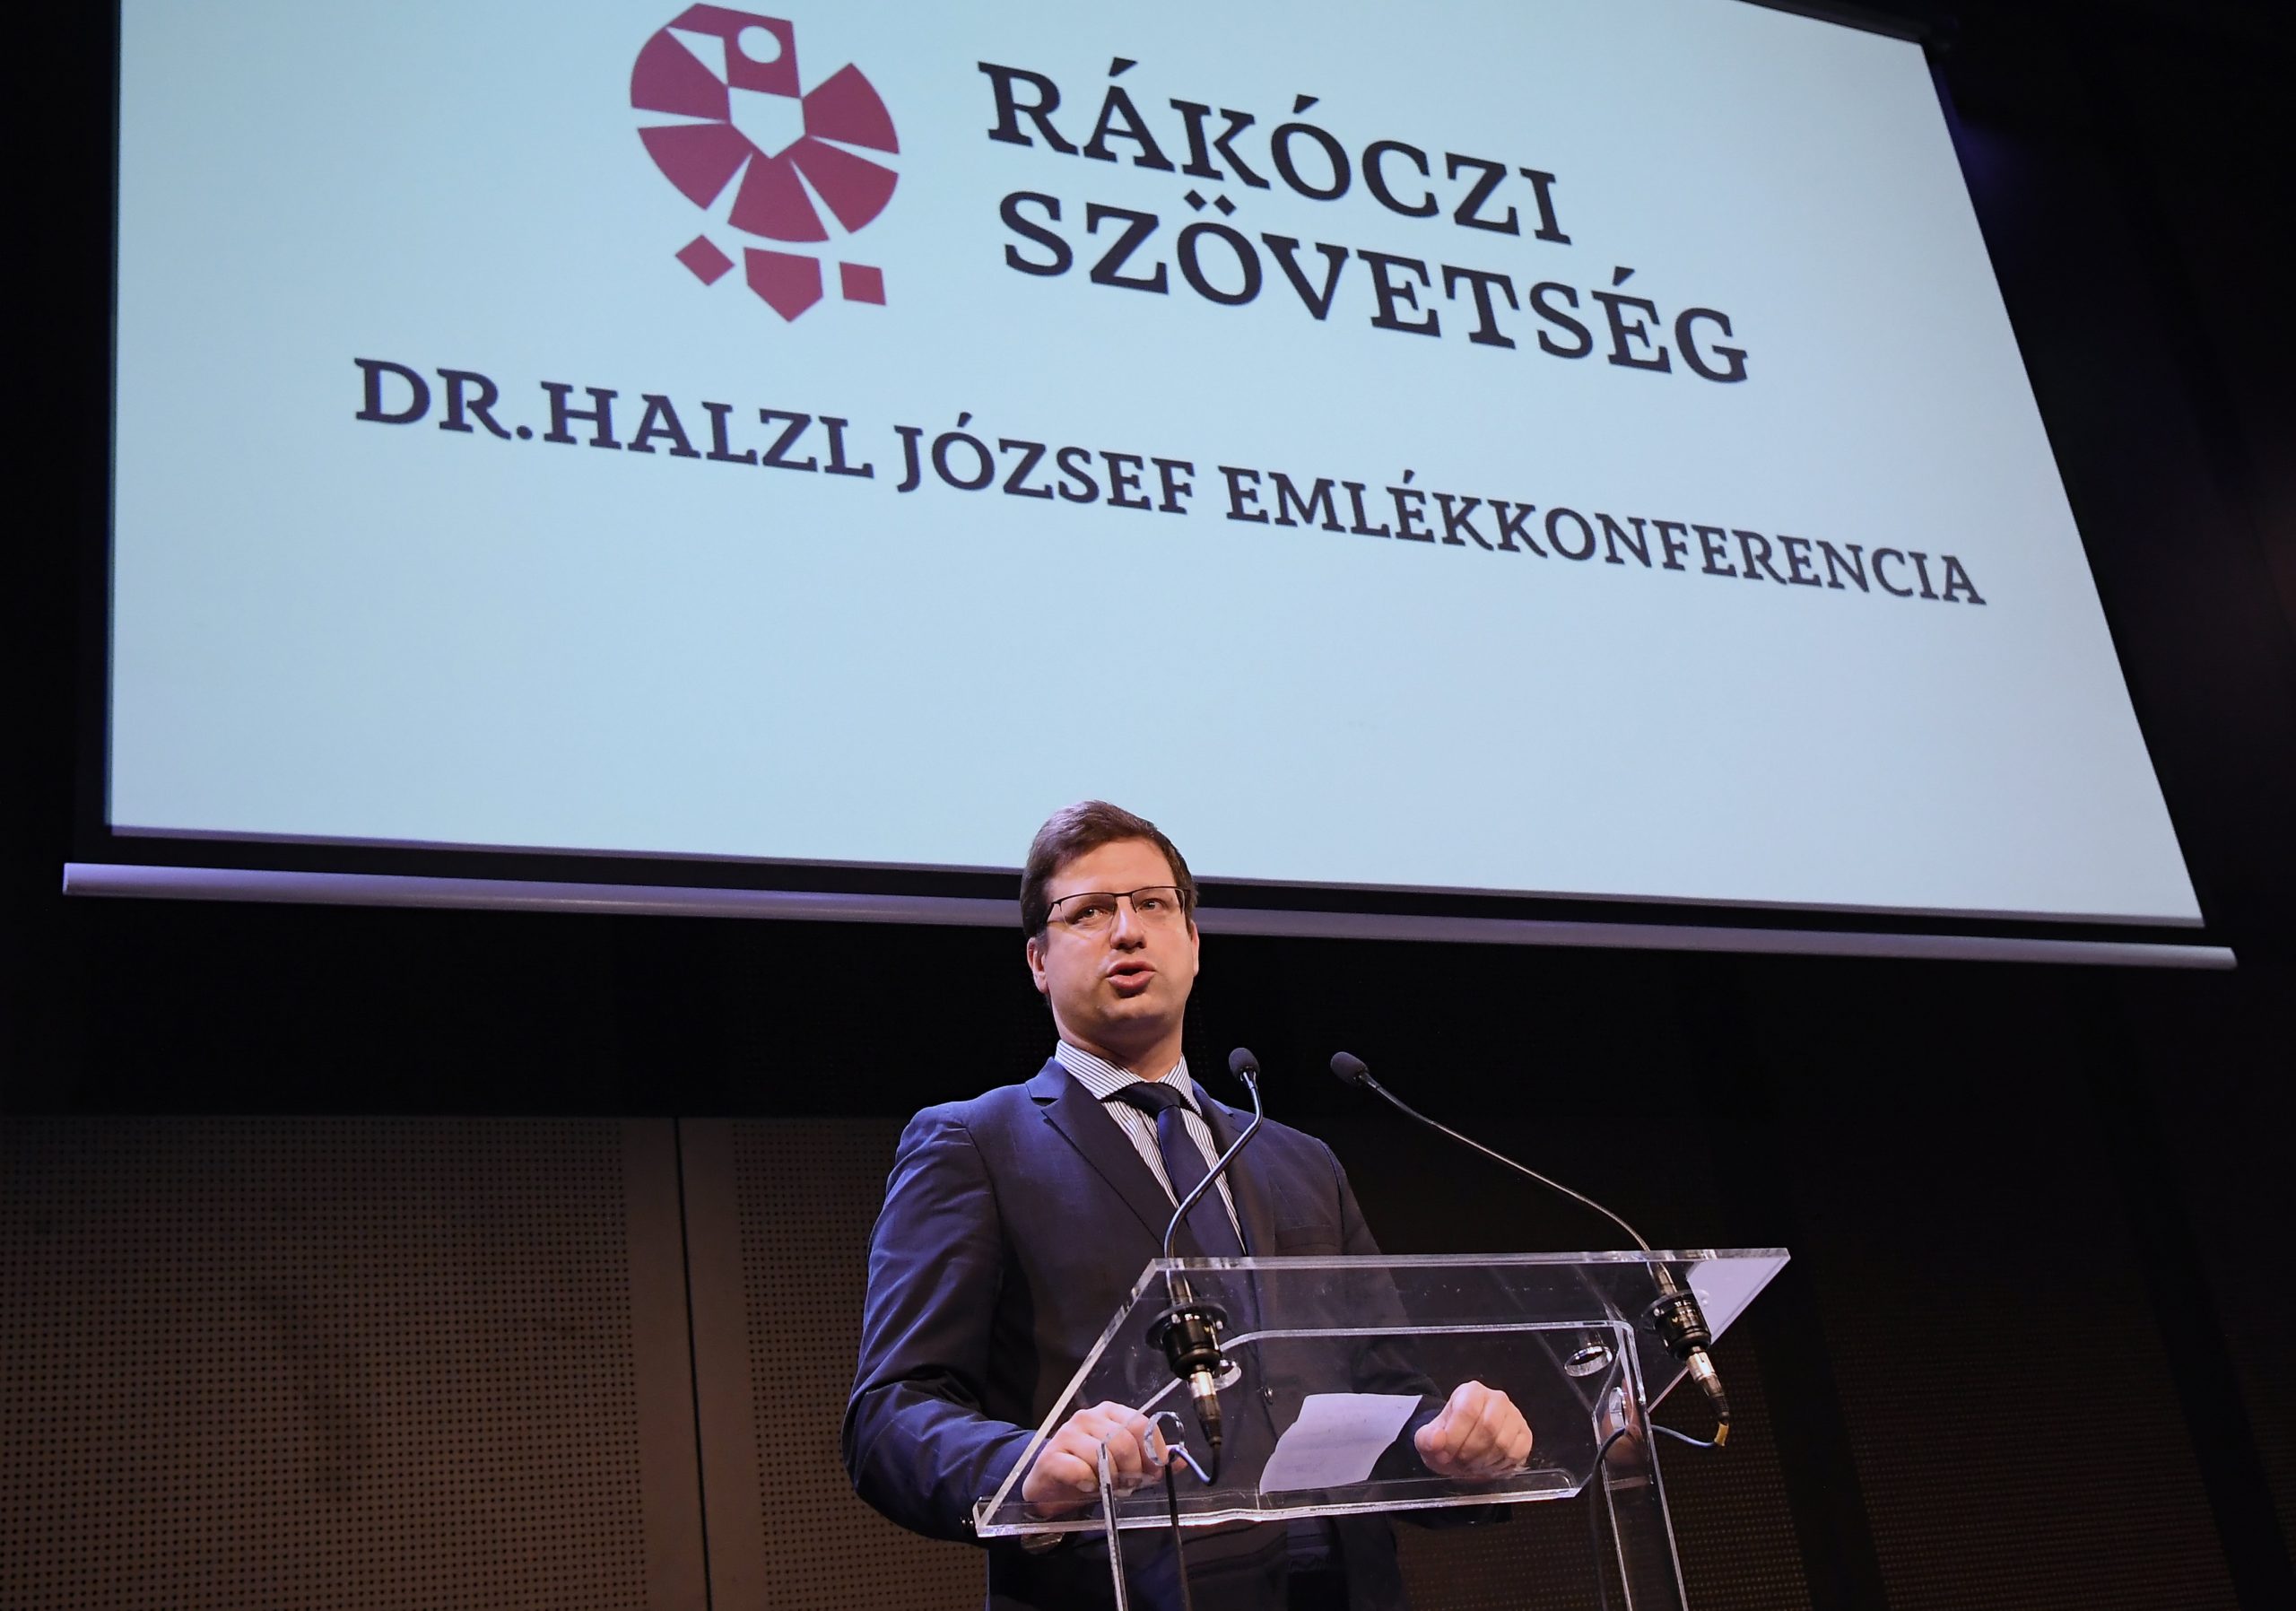 PMO Gulyás to Commemorate Rákóczi Association Honorary Chairman